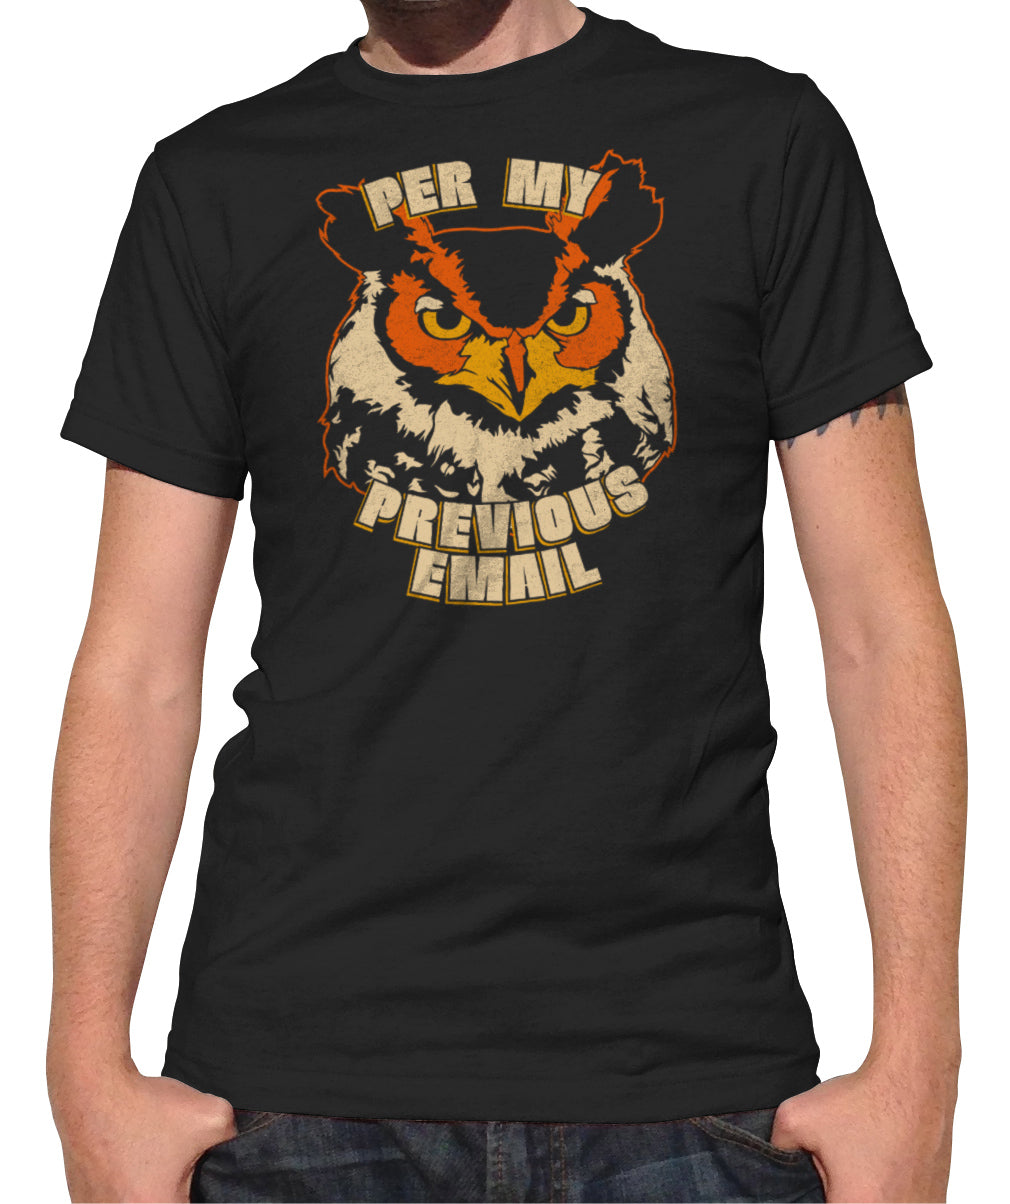 Men's Per My Previous Email Owl T-Shirt